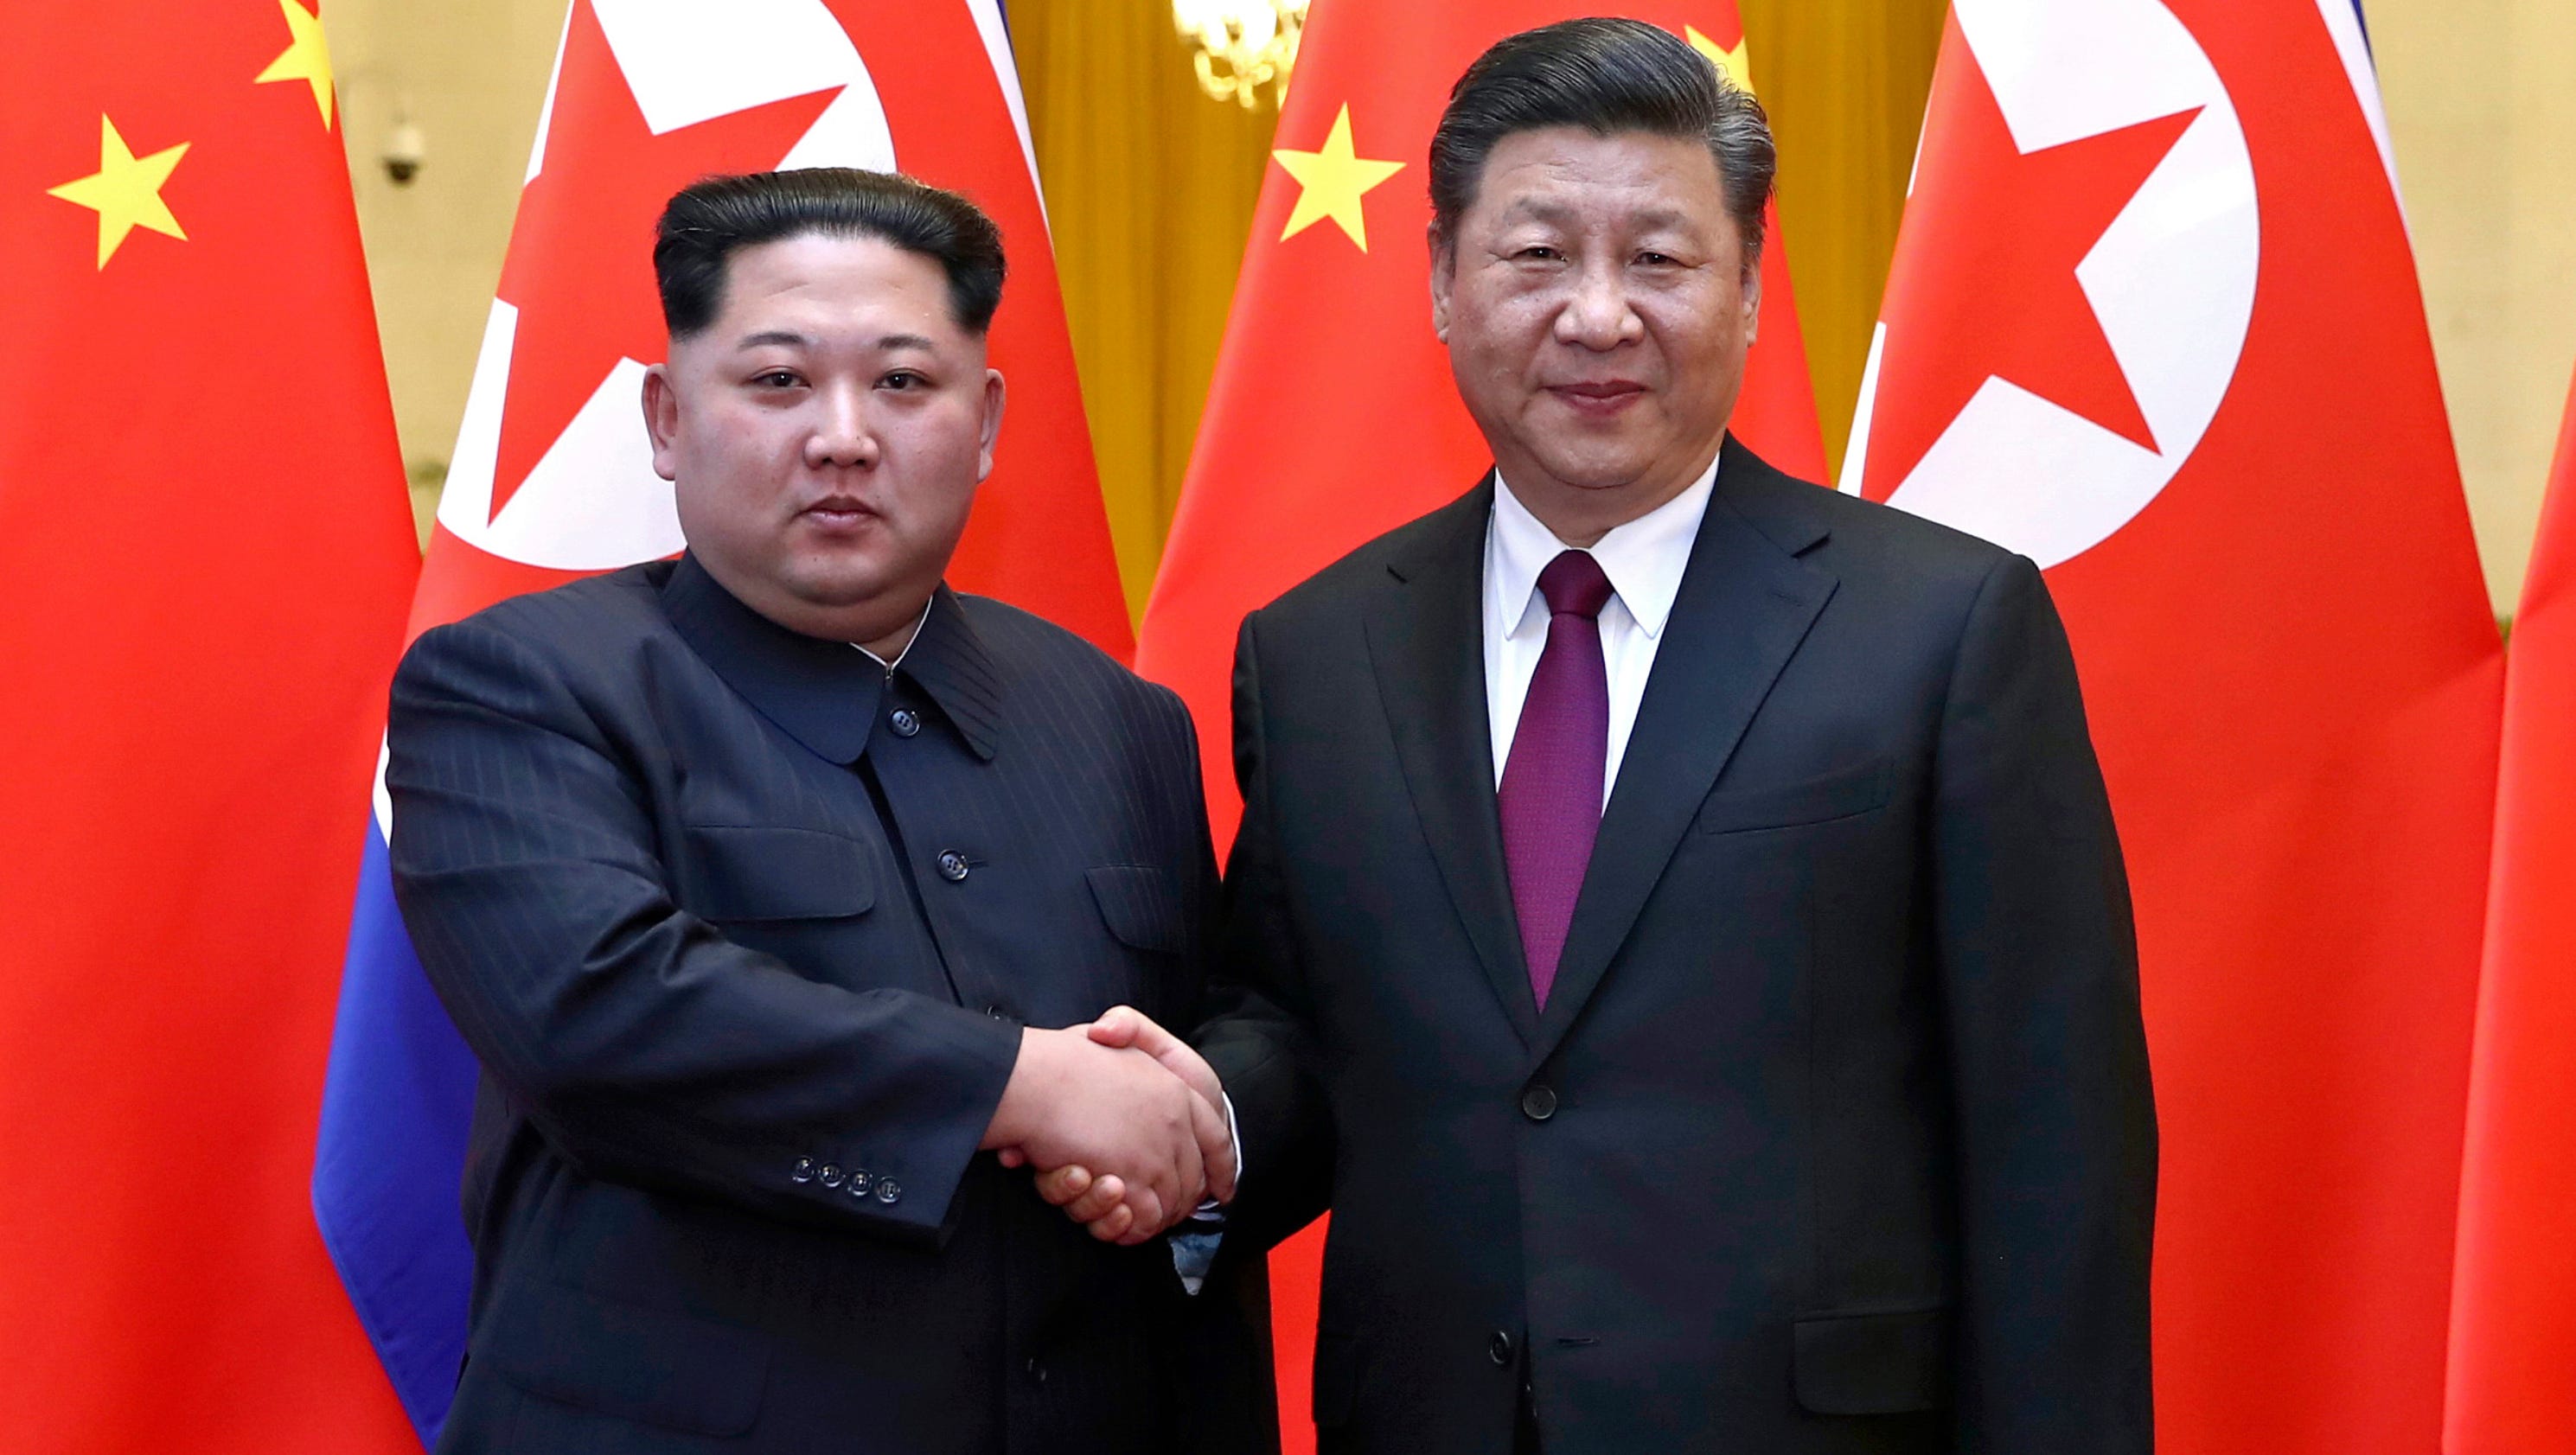 Kim Jong-un Focuses on Economy as Nuclear Talks With U.S. Stall